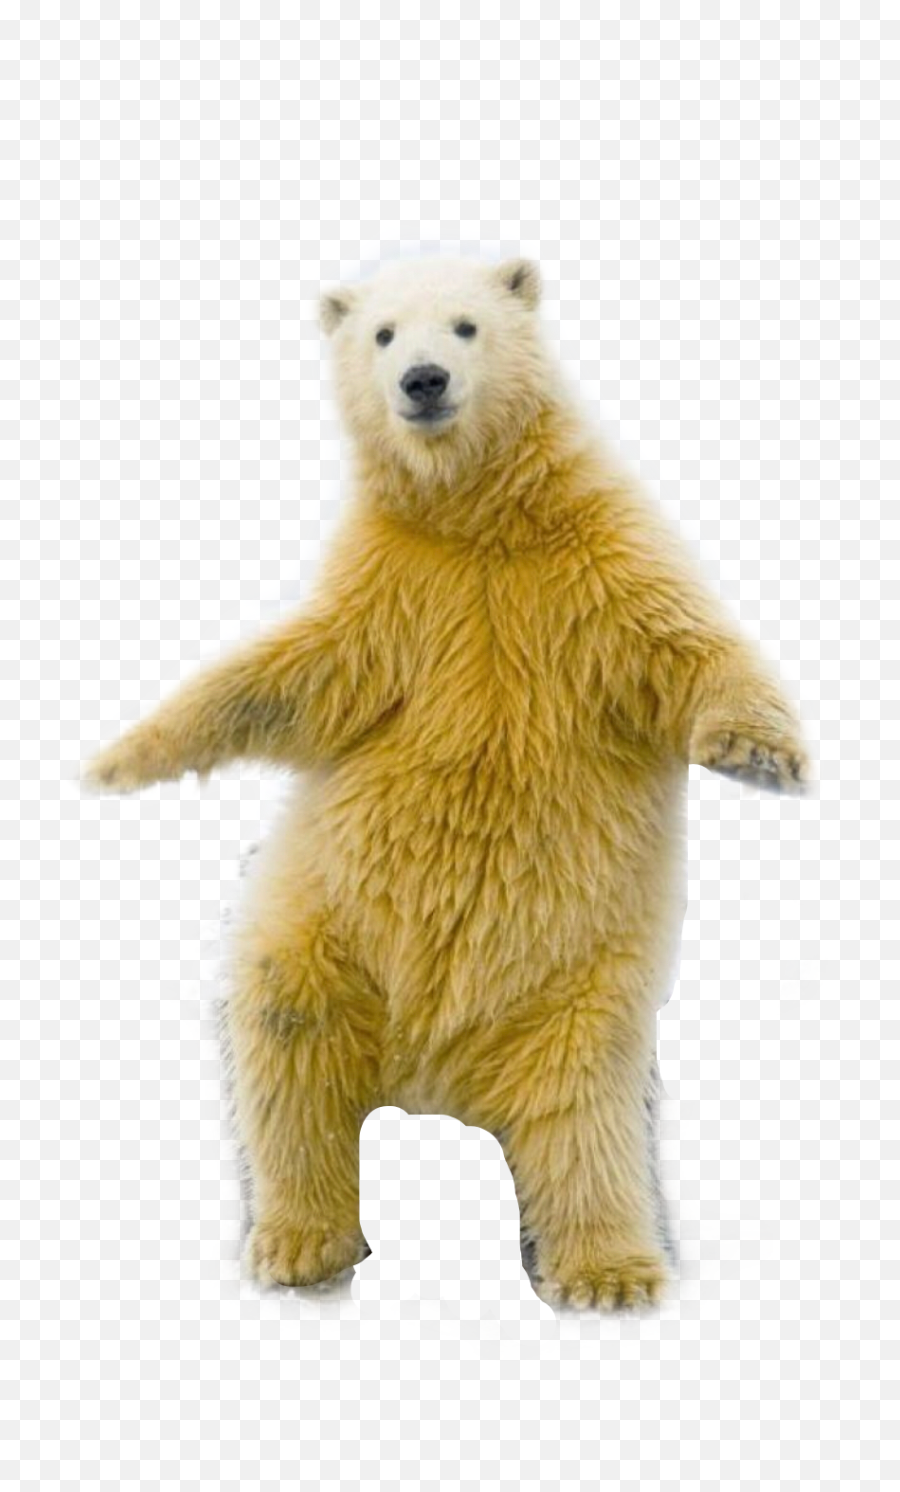 Largest Collection Of Free - Toedit Dancing Bear Stickers On Polar Bear On A Skateboard Emoji,Dancing Bear Emoji